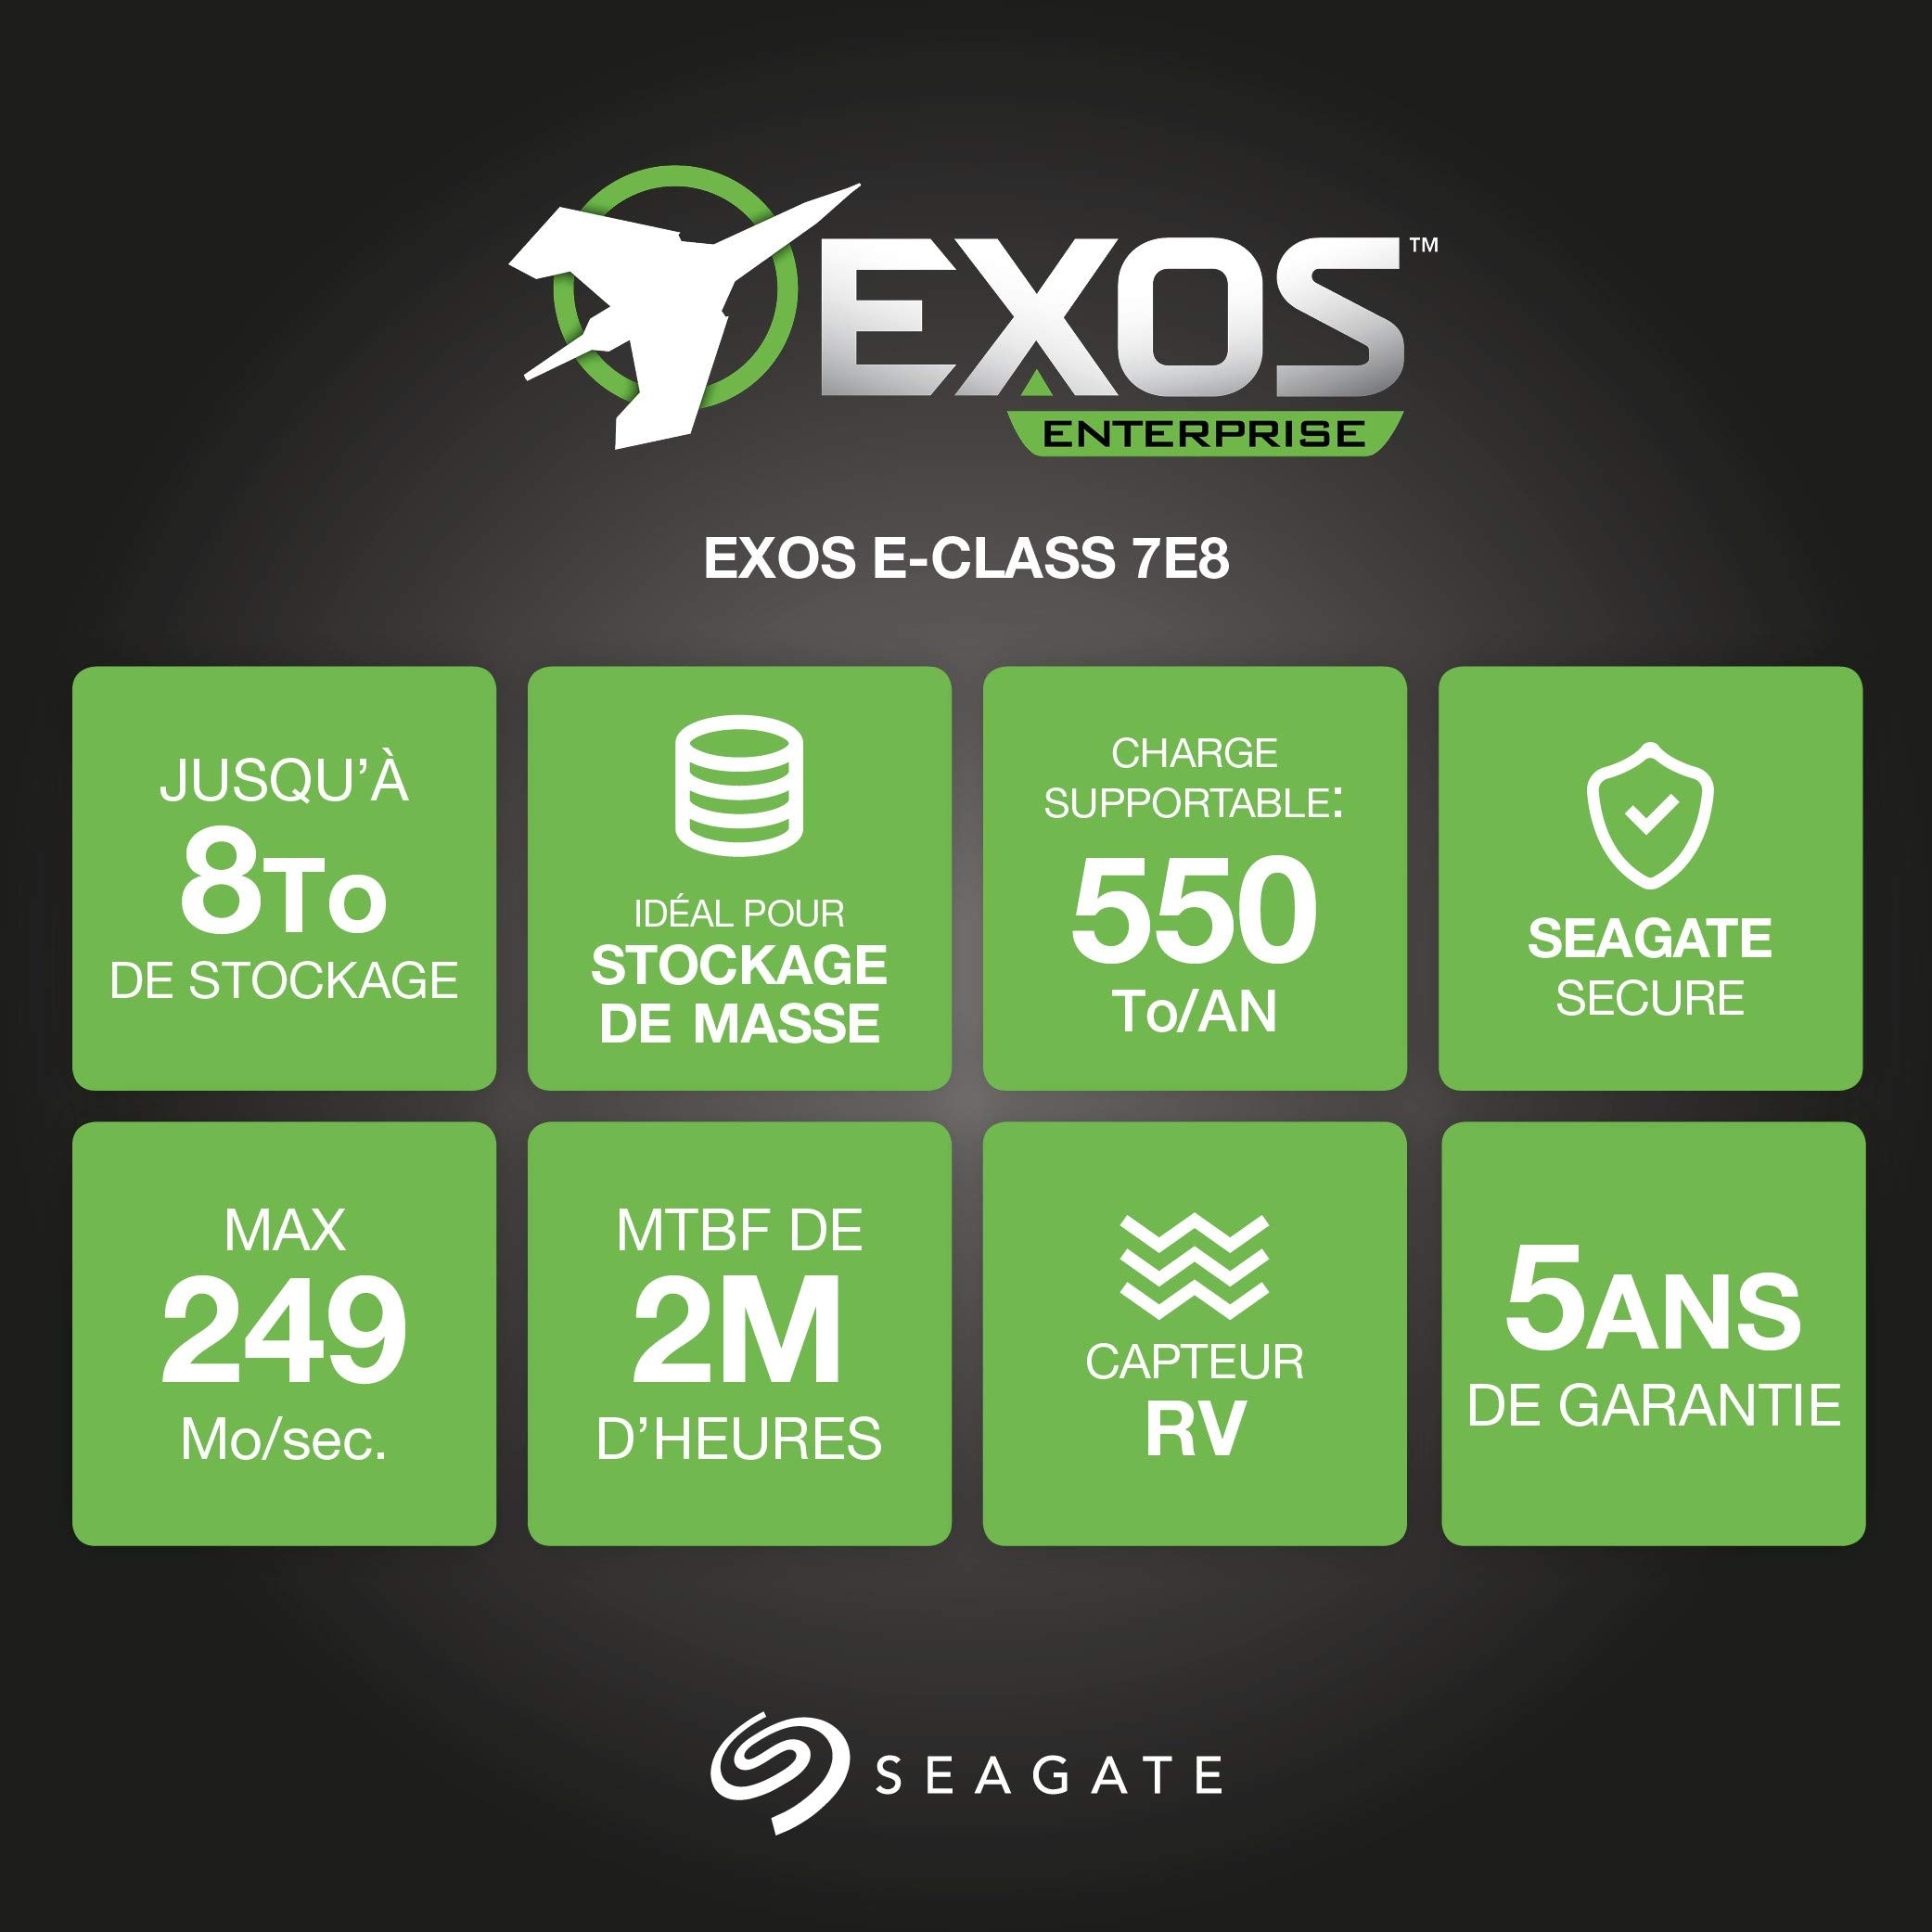 Seagate ST4000NM0115 4TB Exos 7E8 SATA 6 Gb/s Enterprise NAS HDD (New with Warranty) 512e 128MB 3.5 Inch 7200 RPM Hard Drive